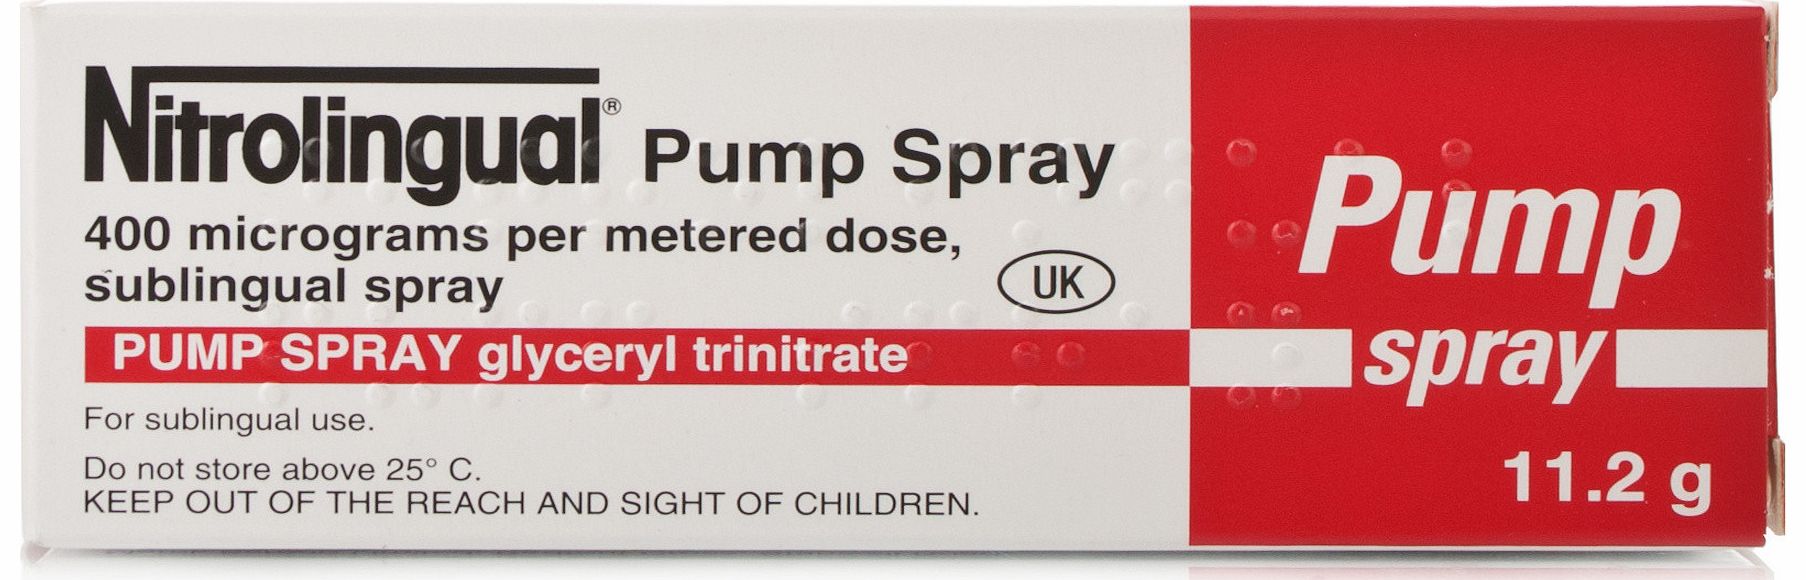 Unbranded Nitrolingual Pumpspray 200 Dose